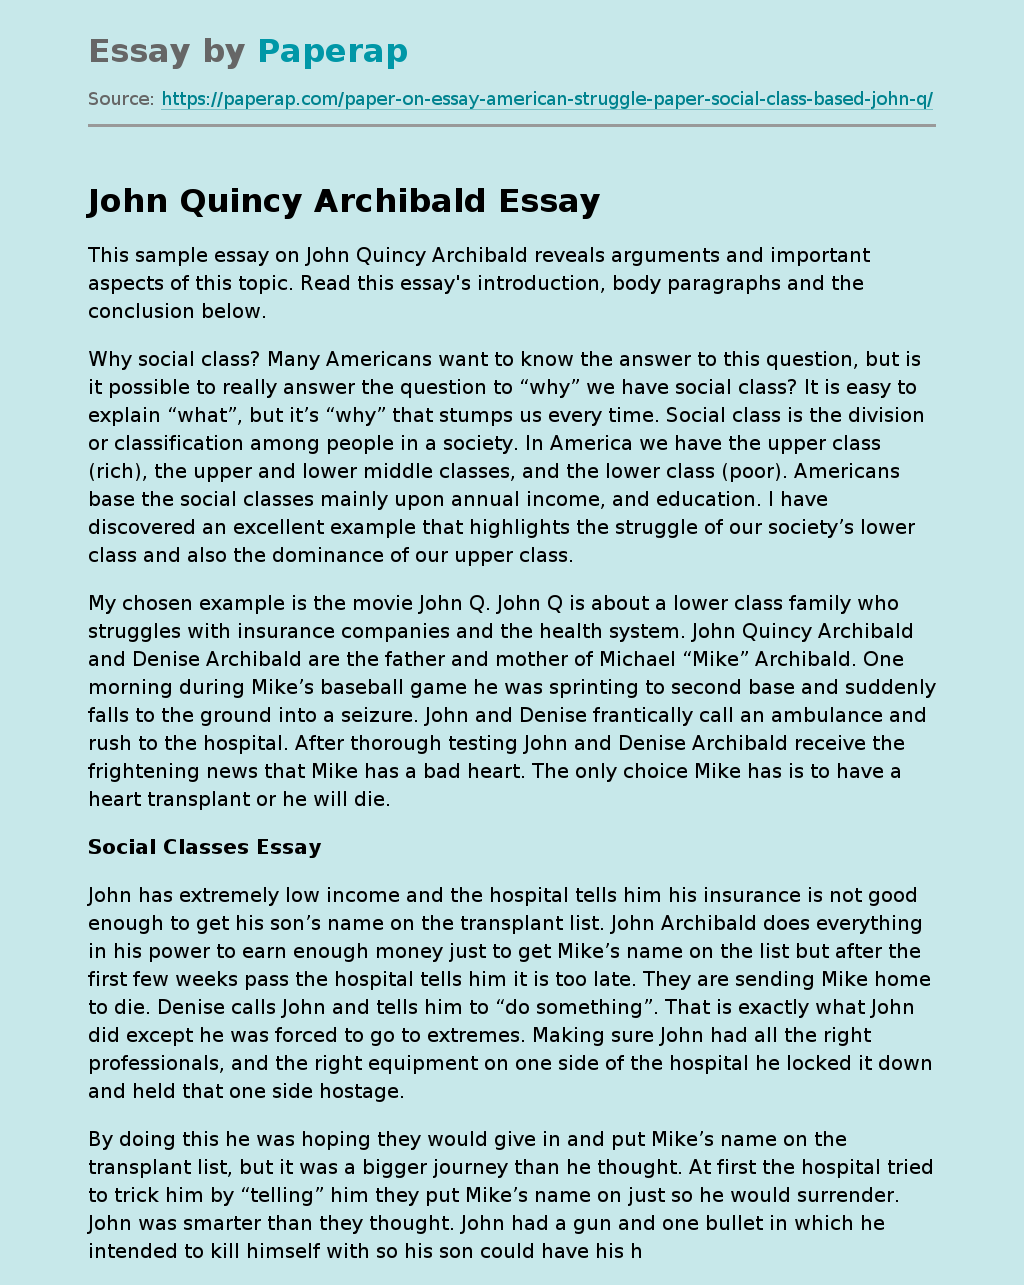 John Quincy Archibald